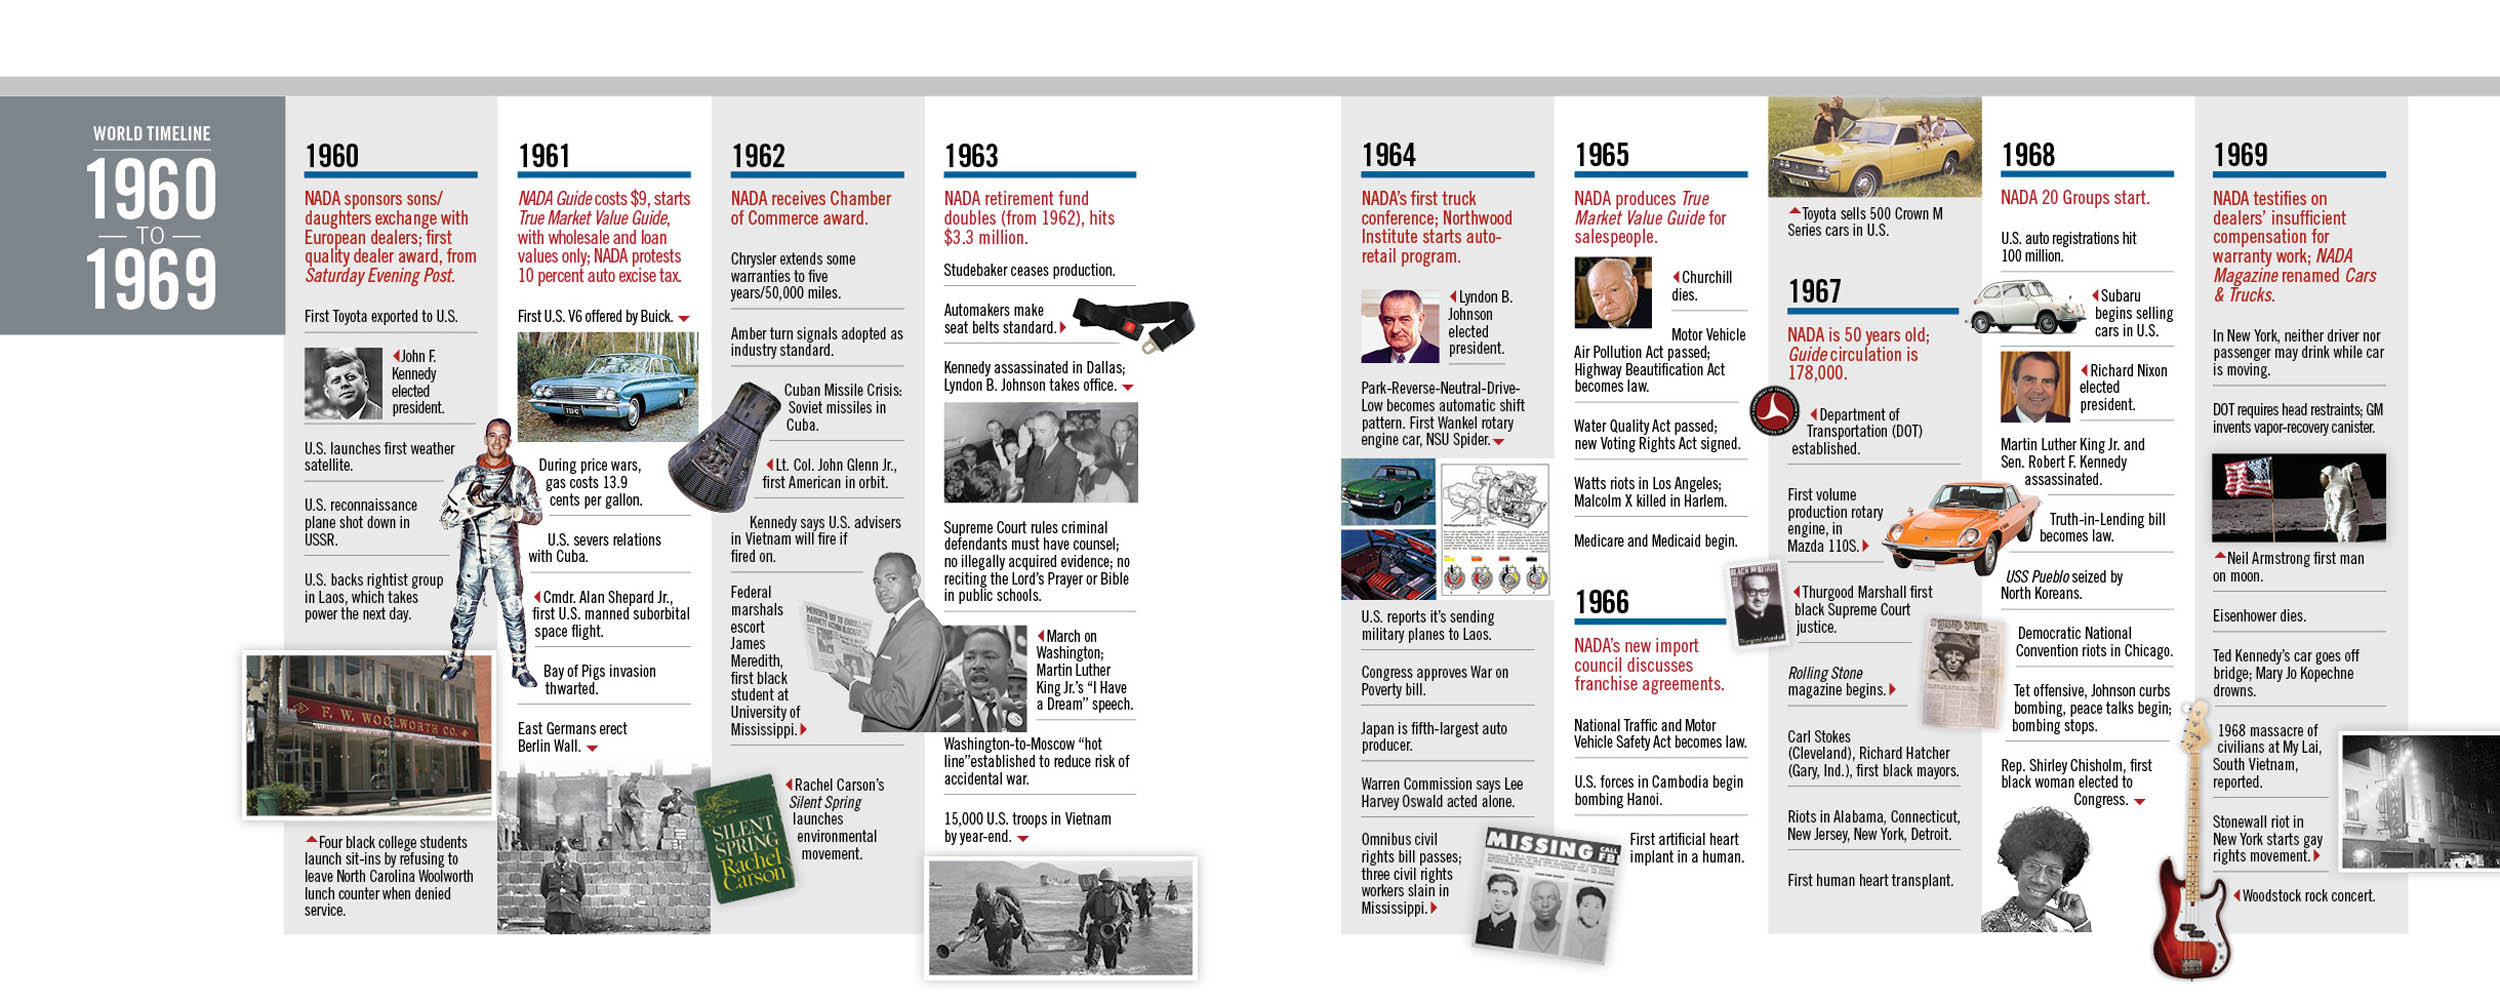 NADA Story Timeline 1960-1969